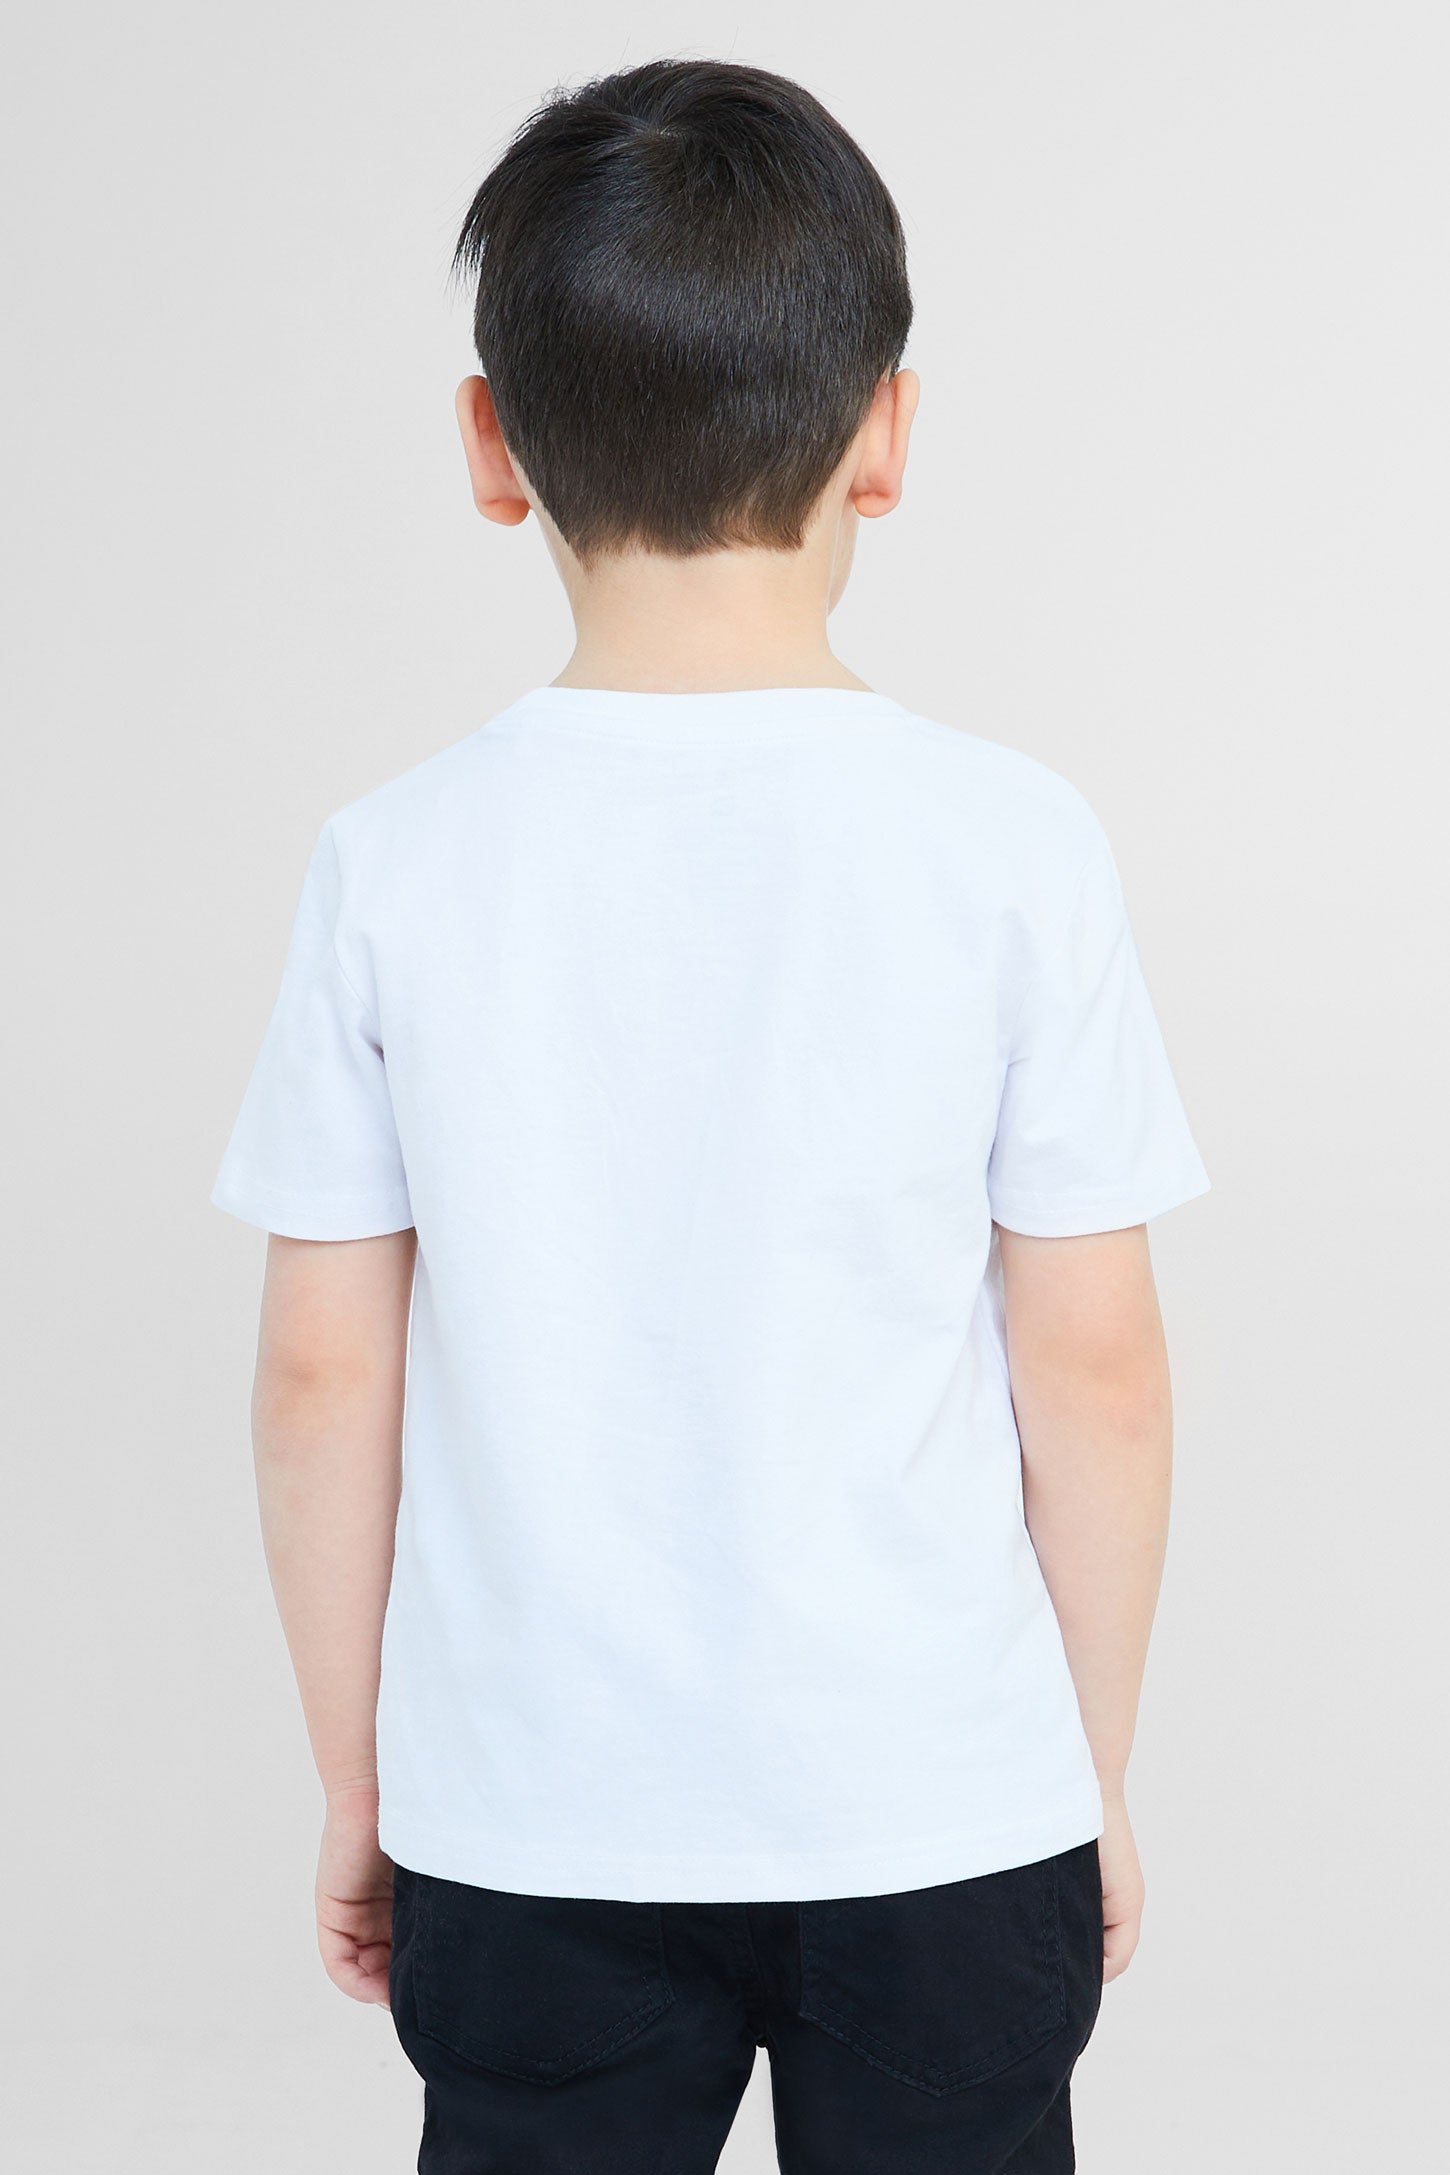 T-shirt essentiel, 2/20$ - Enfant garçon && BLANC